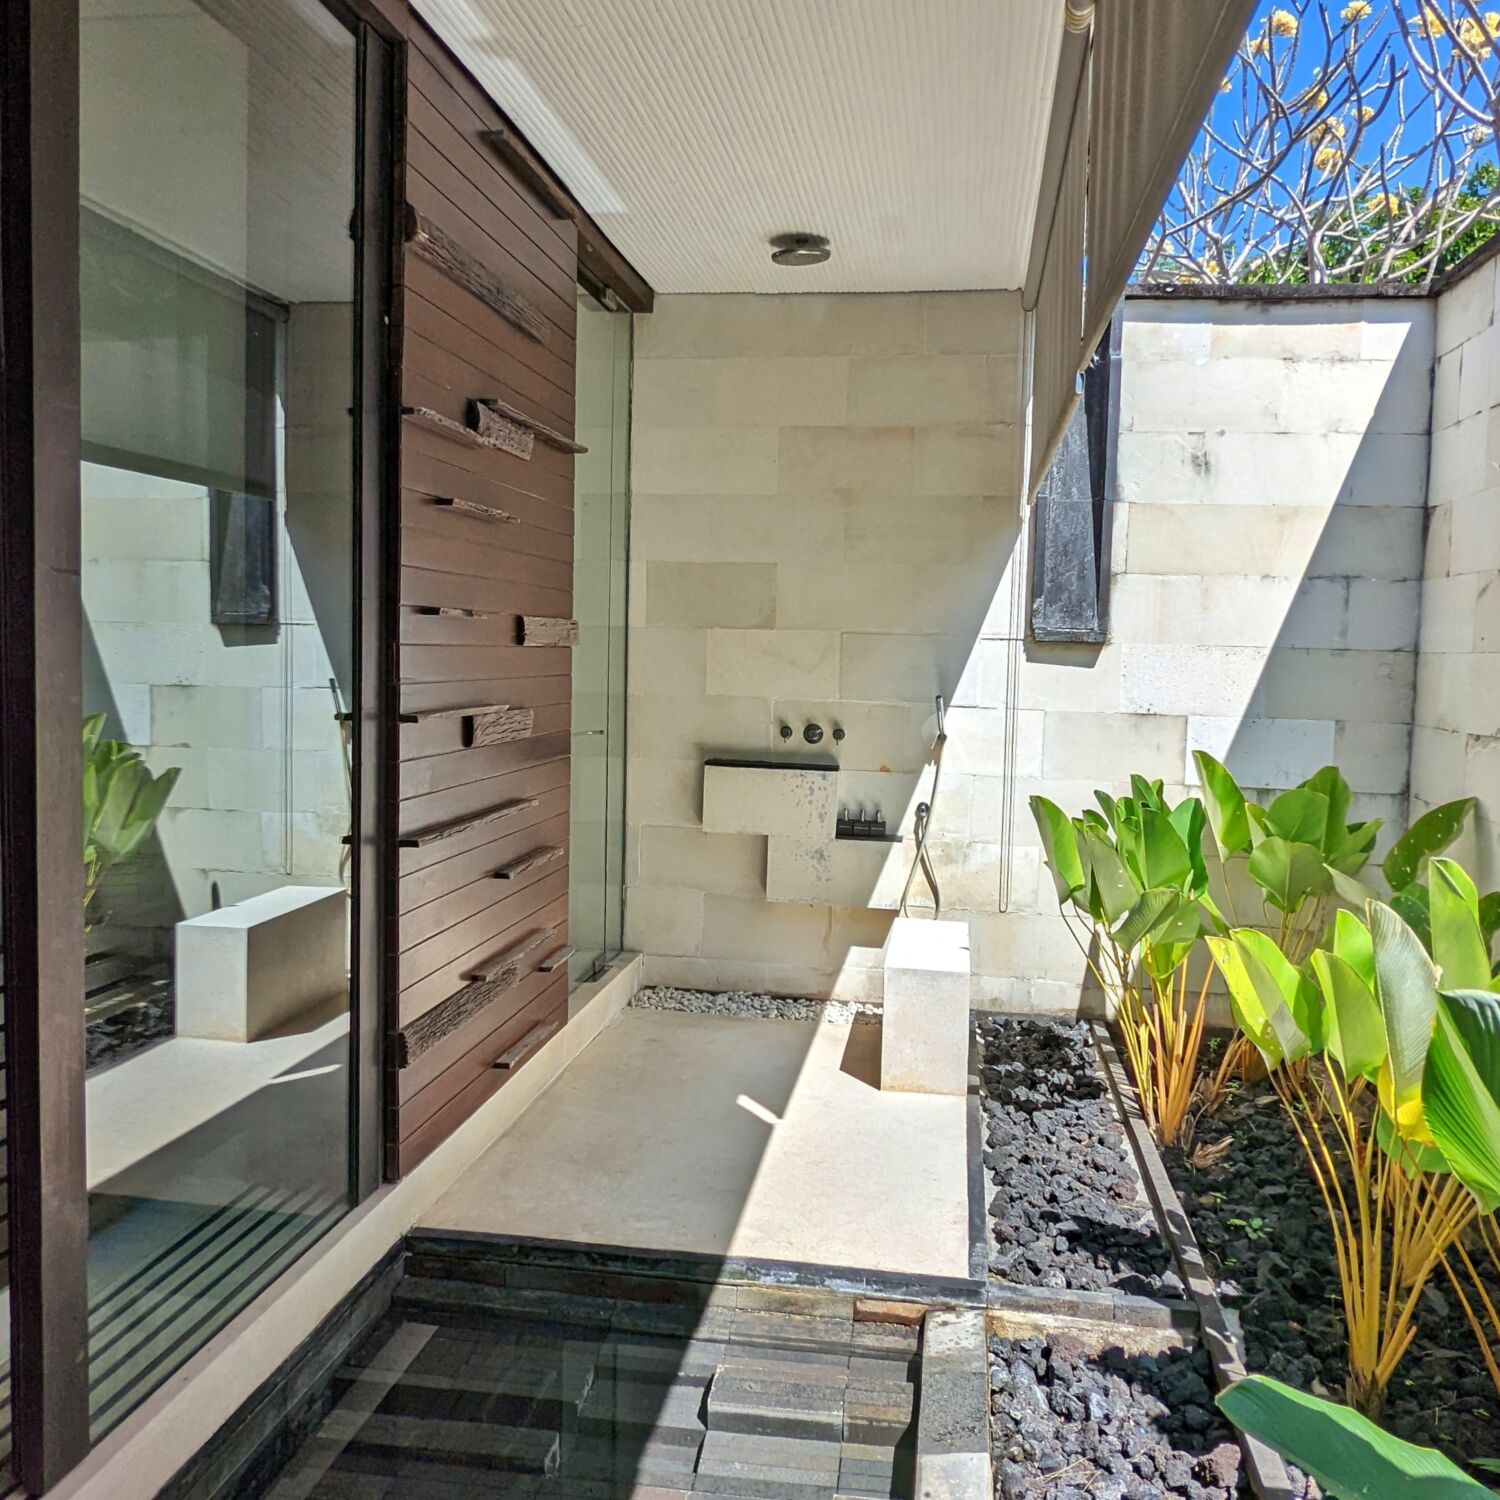 Alila Villas Uluwatu Bali One-Bedroom Pool Villa Outdoor Shower